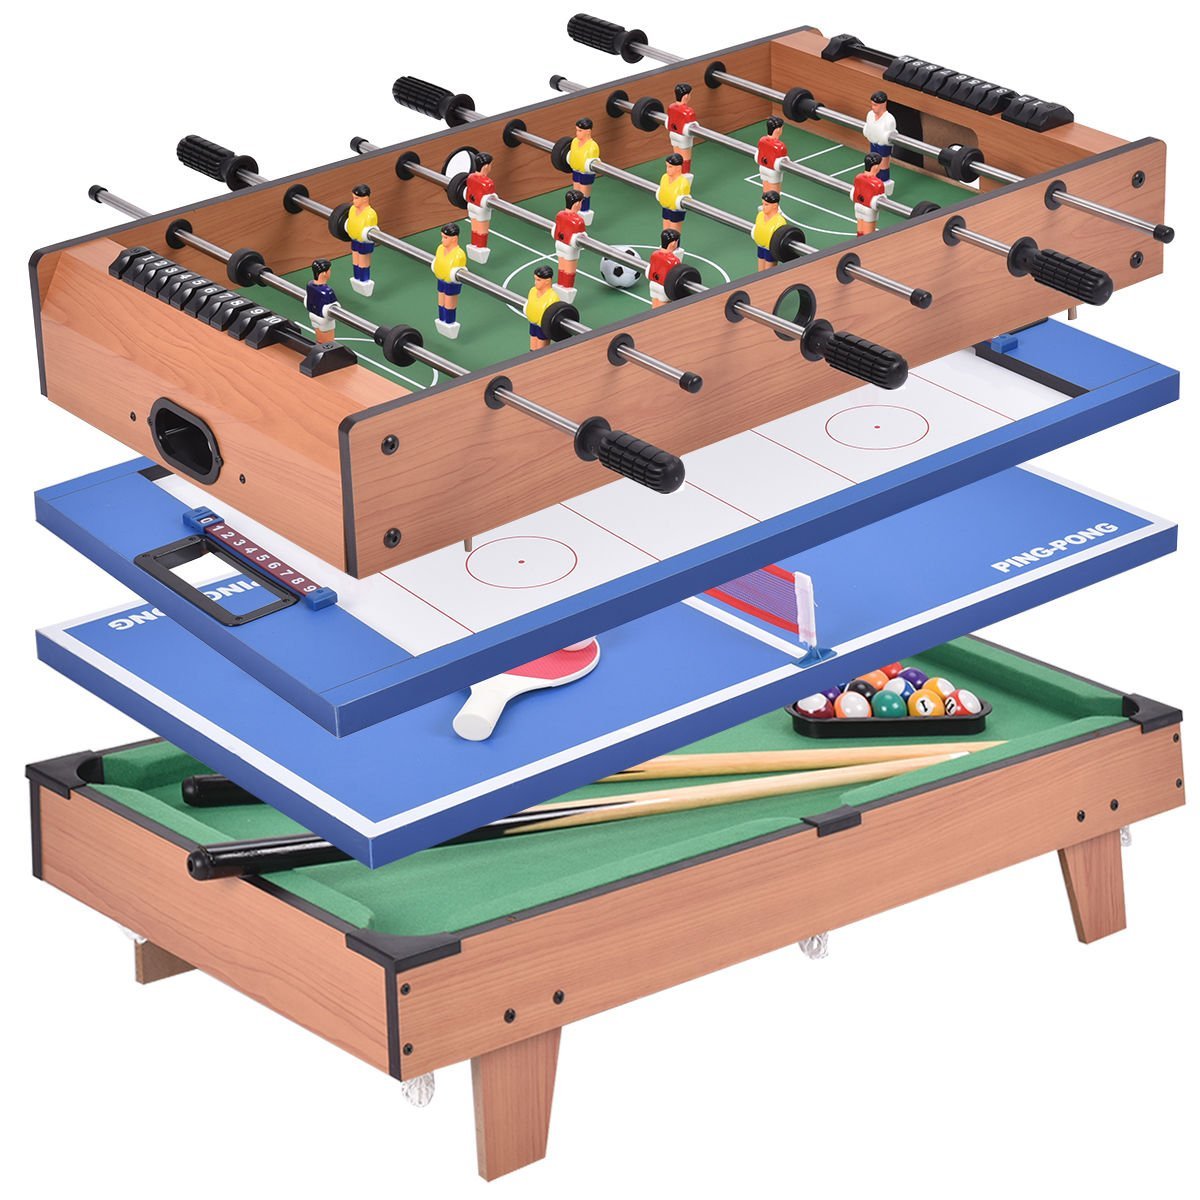 Giantex 4-in-1 Multi Game Table